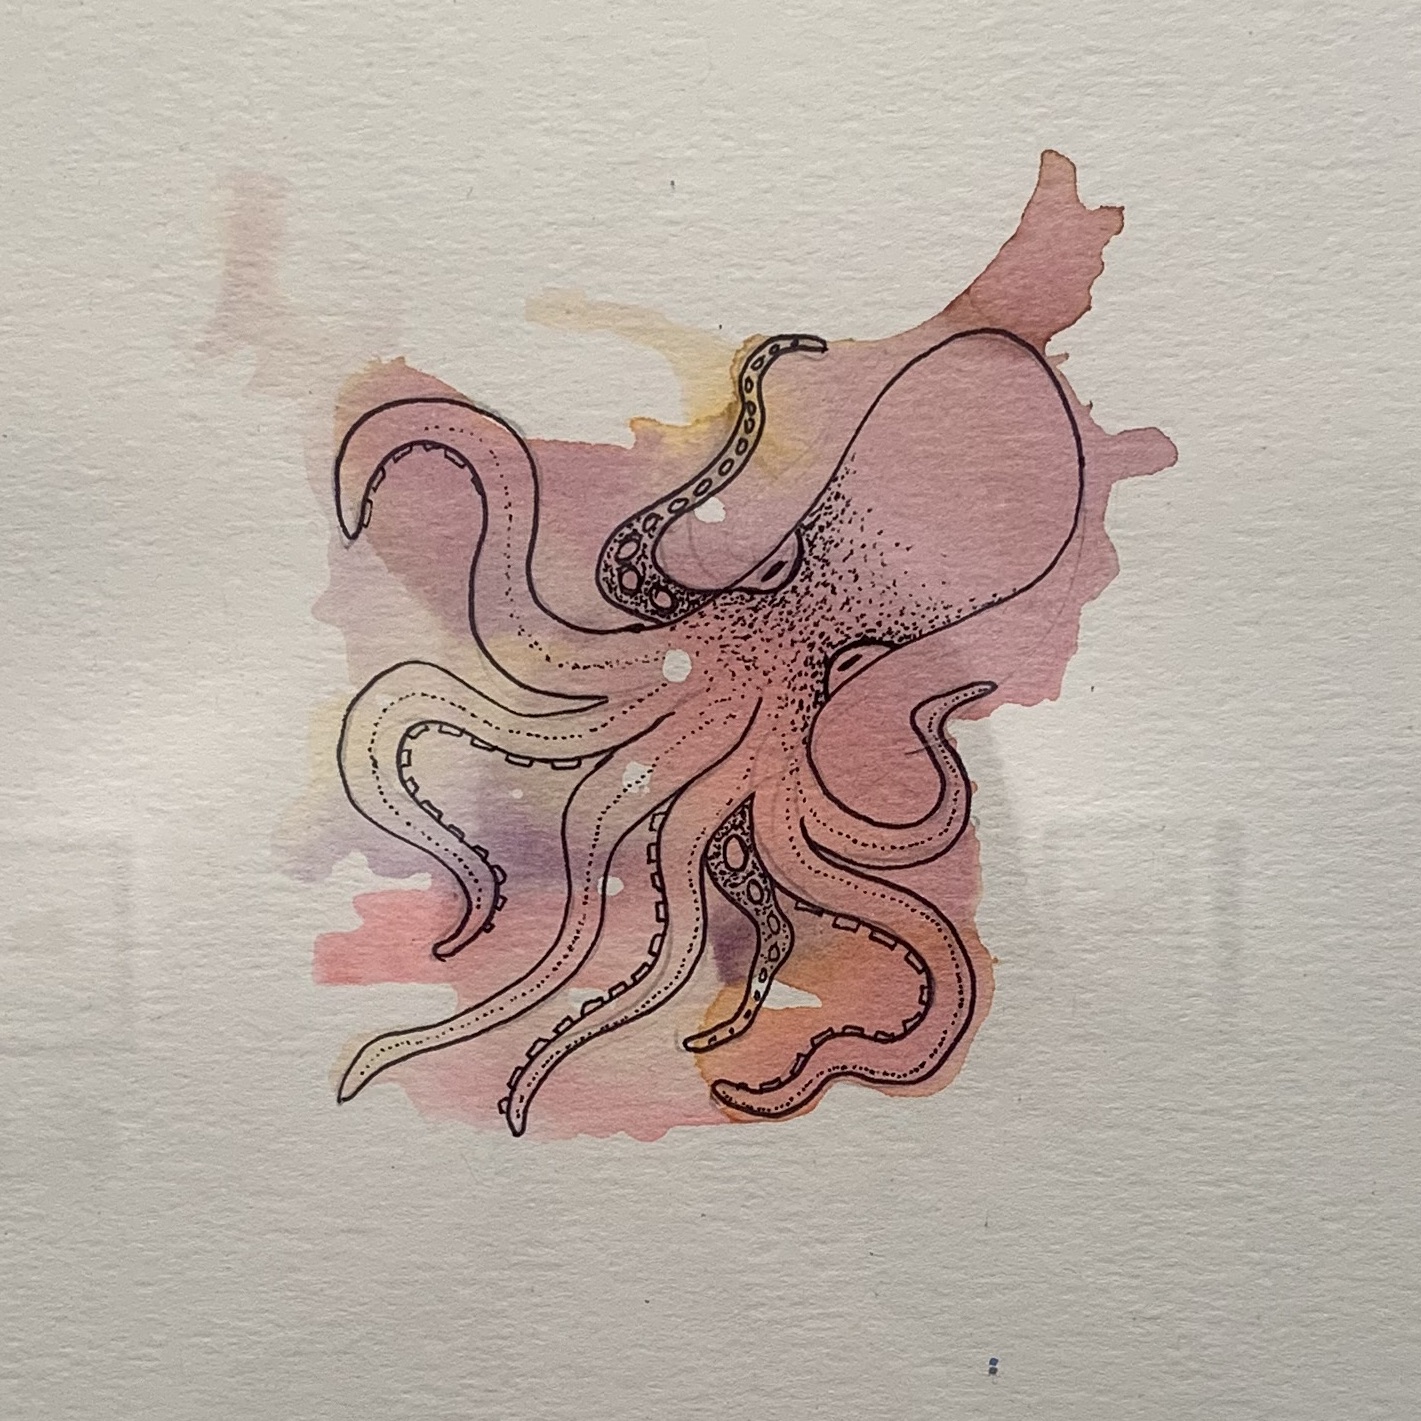 003: Image description: pink octopus on white background